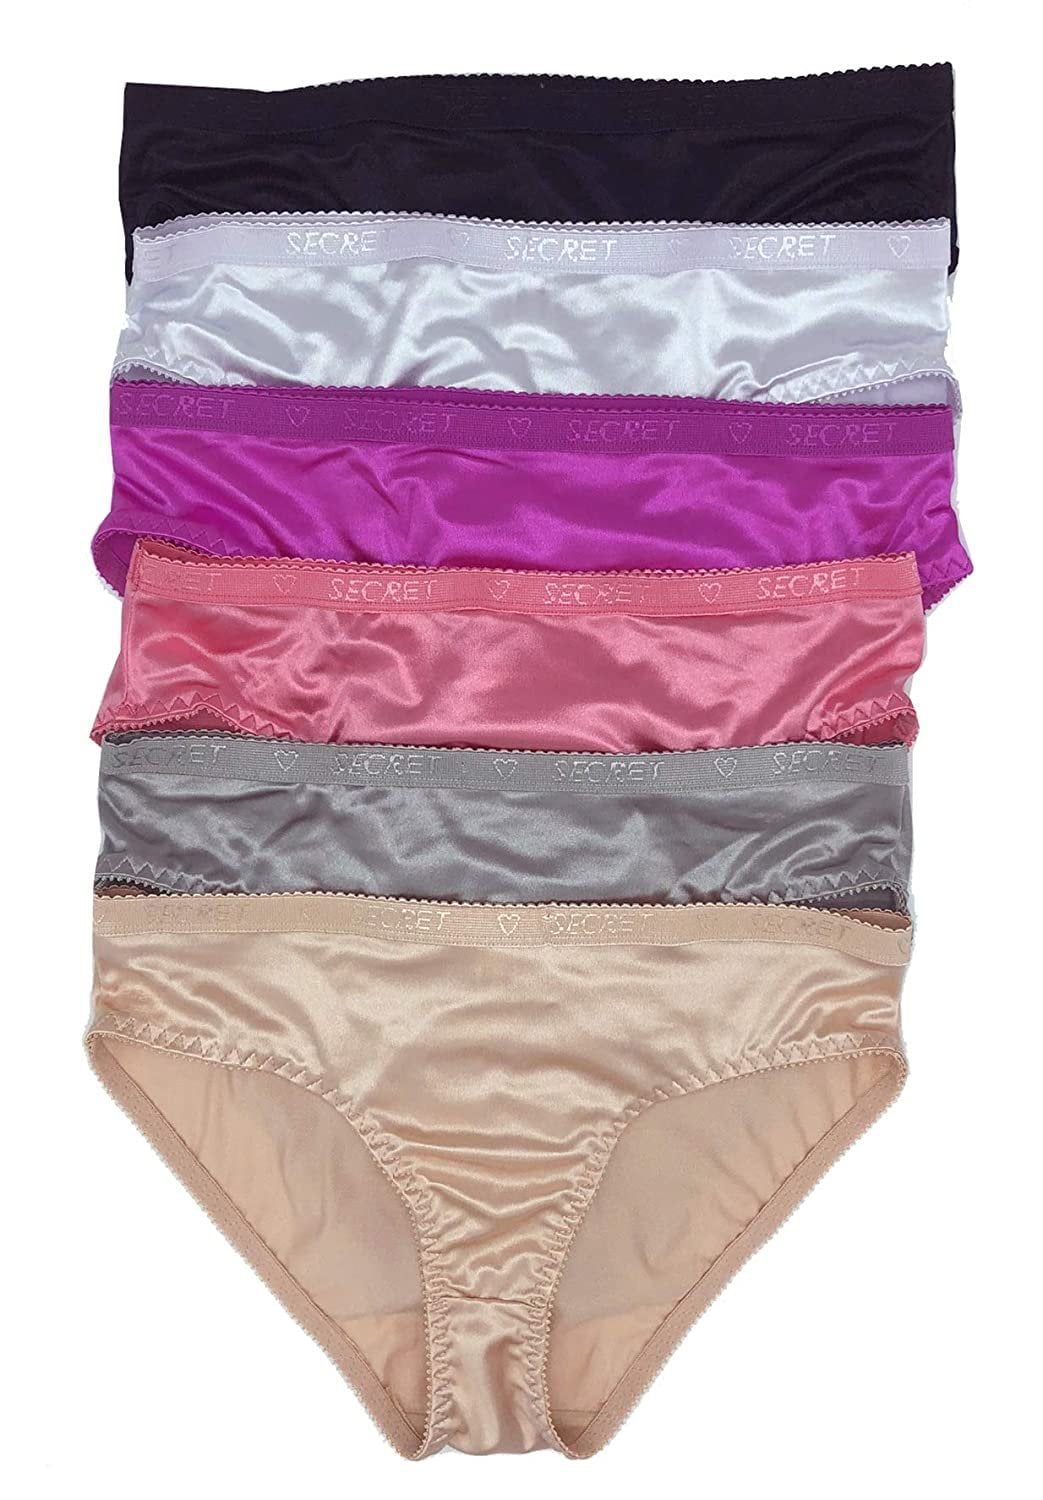 Wholesale 6 Pairs 100% Pure Silk Women's Bikini Panties Size M L XL 2XL 3XL